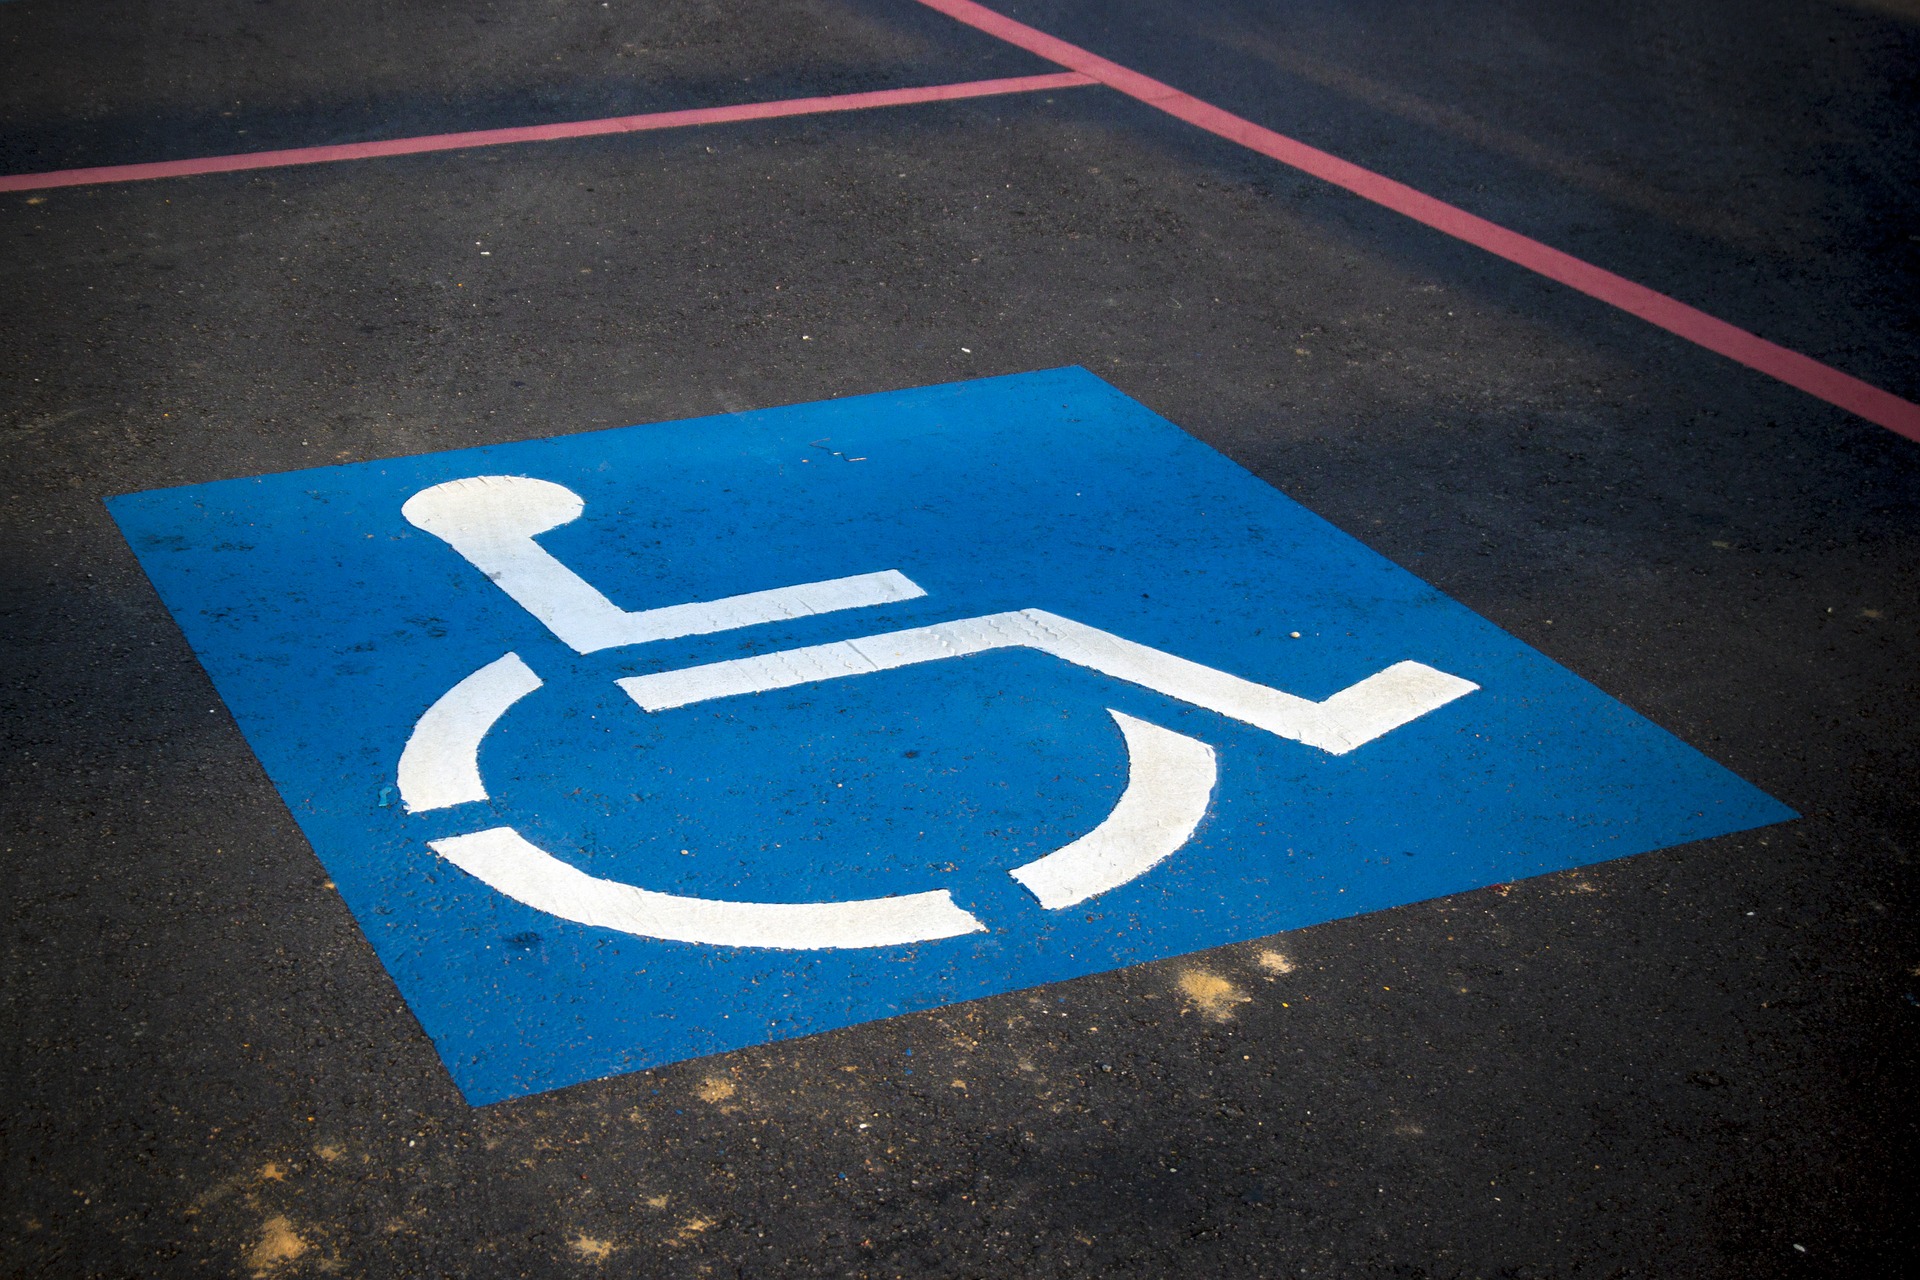 handicapped parking spot